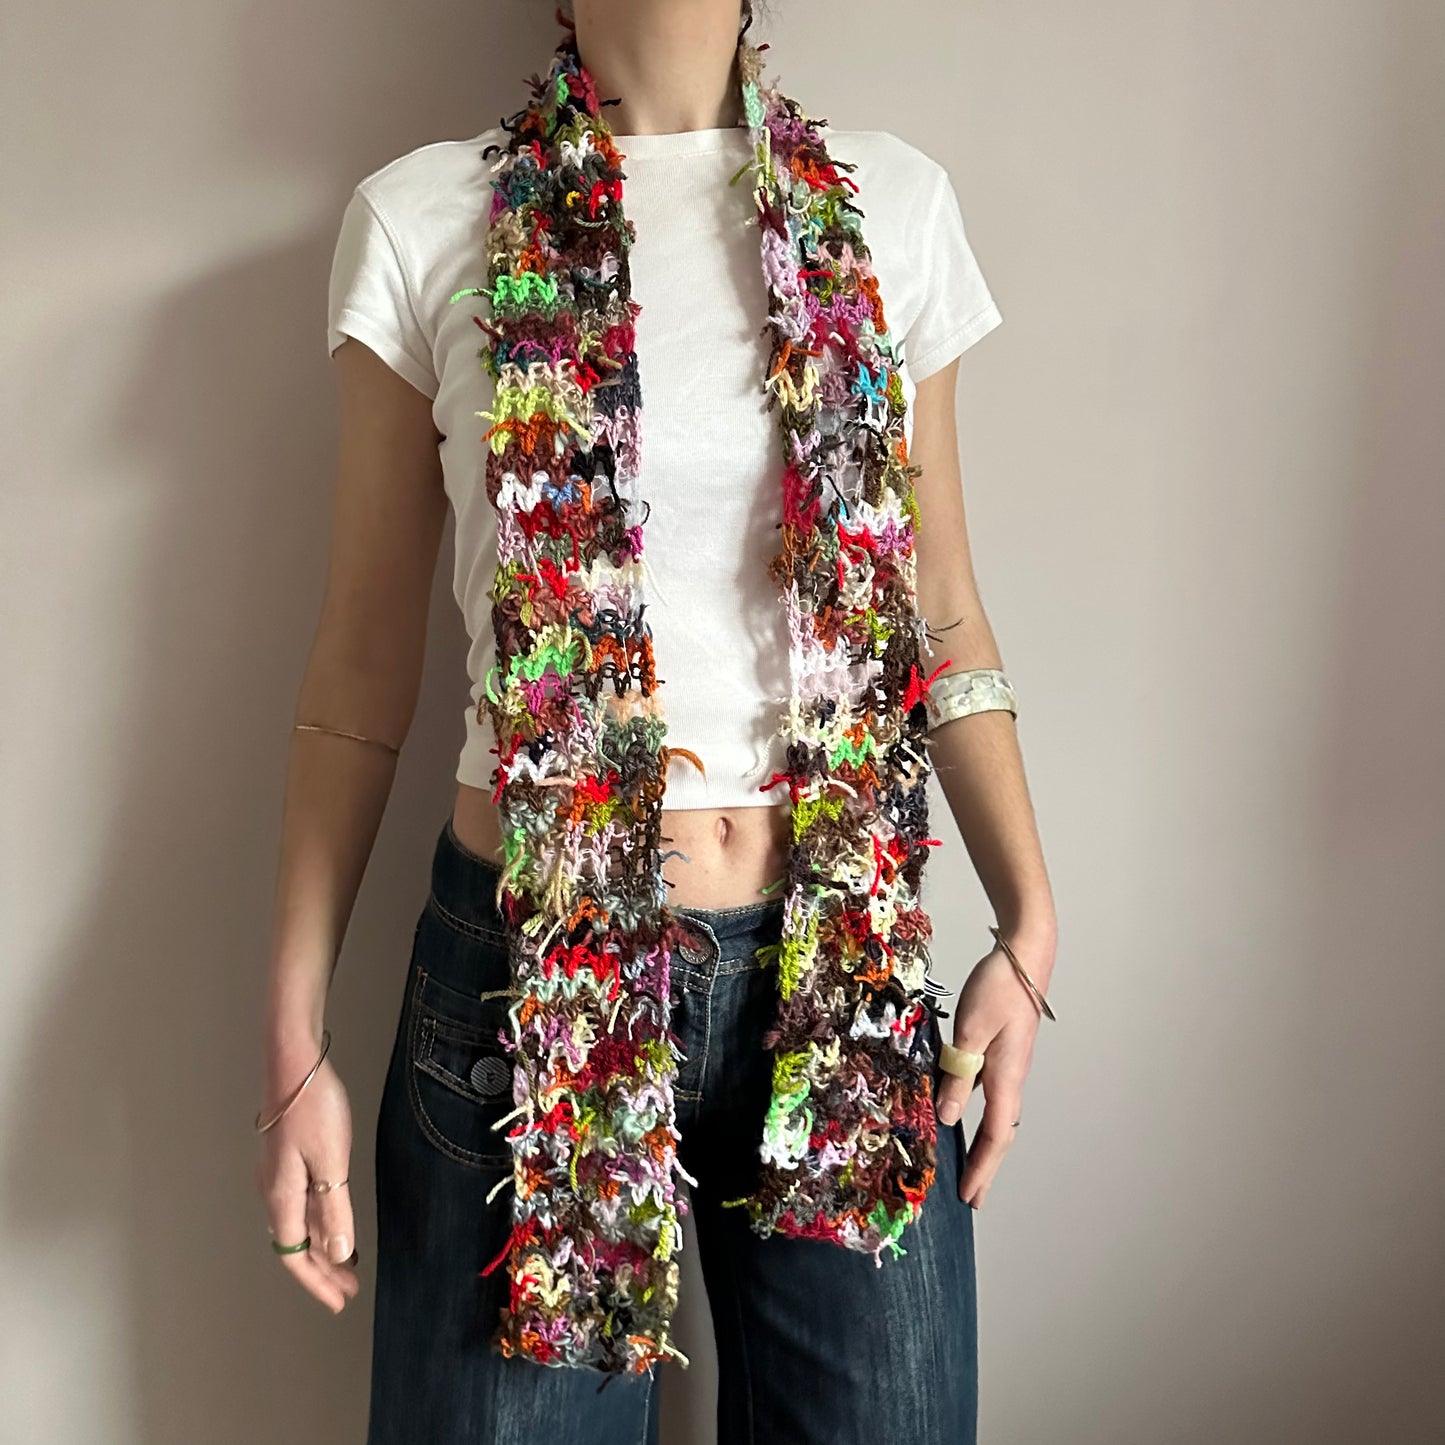 Scrappy skinny scarf #1 - handmade from leftover yarn scraps